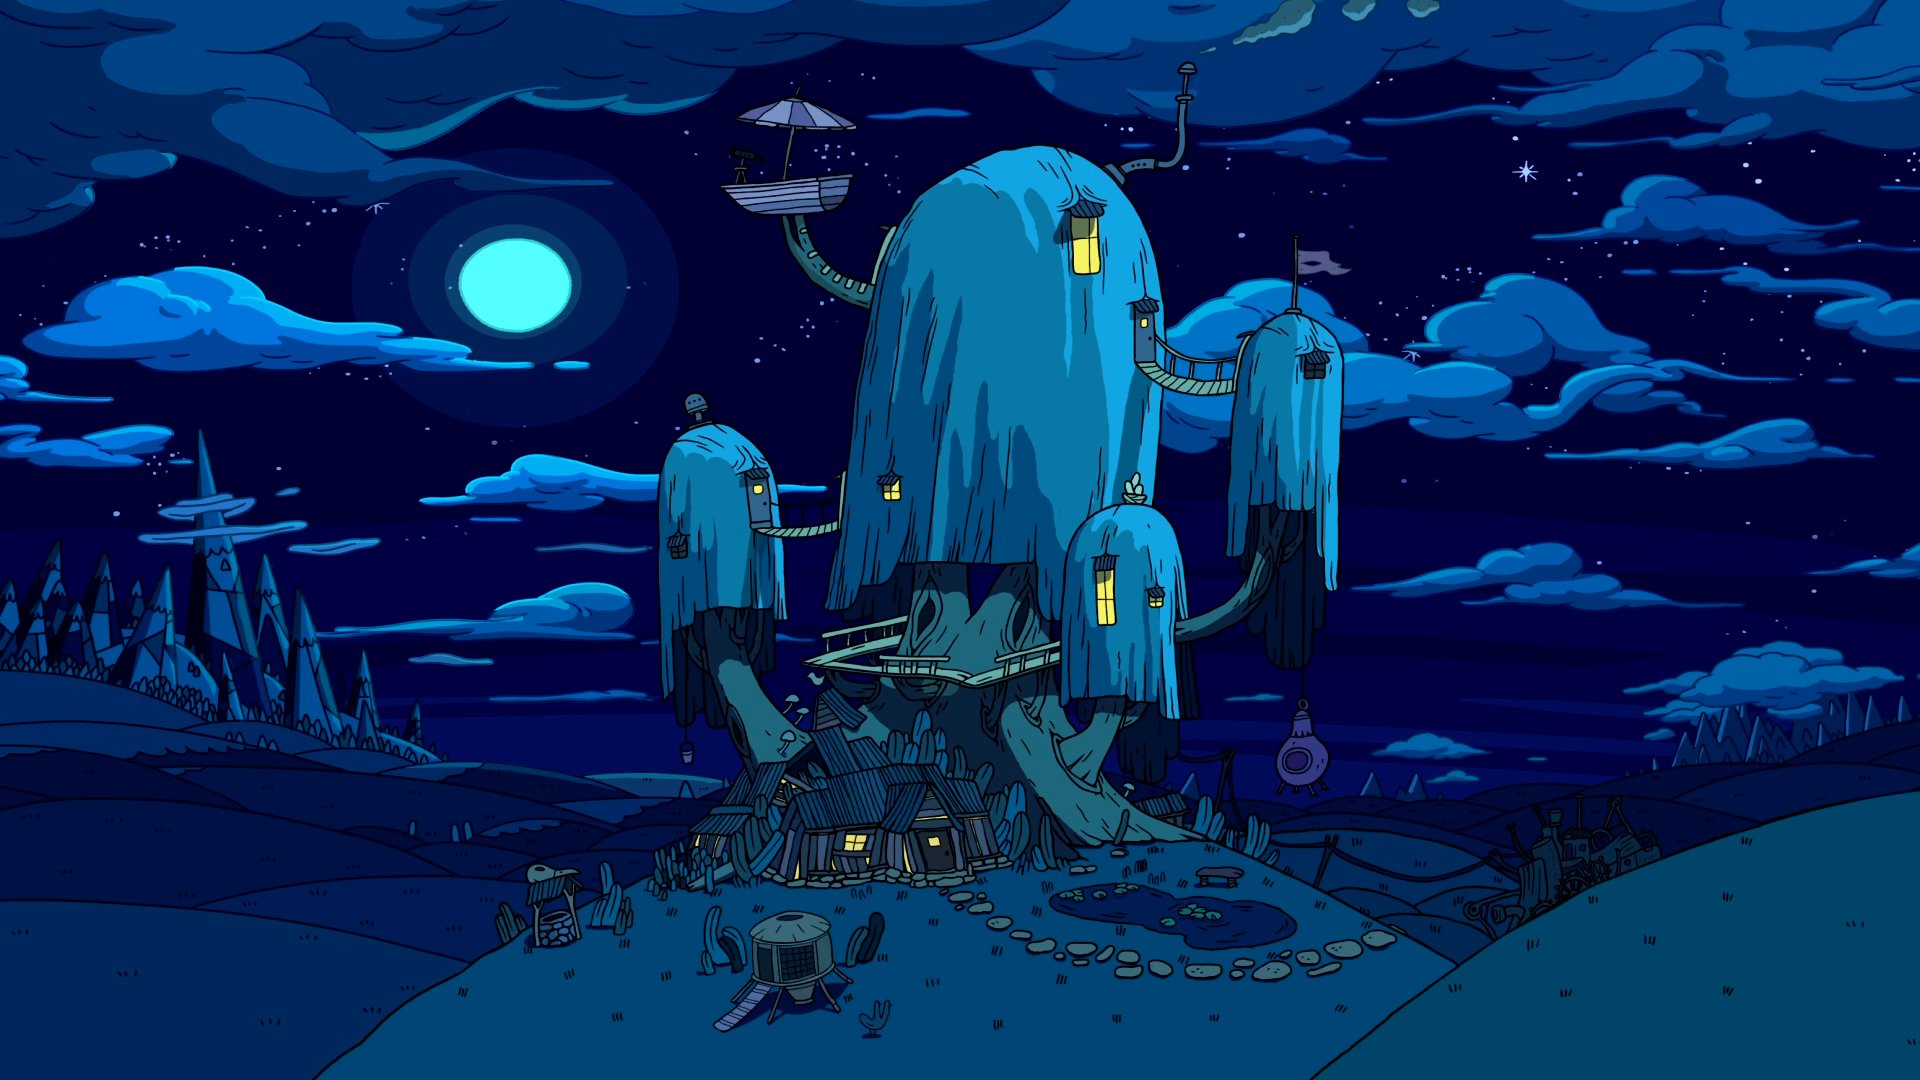 General 1920x1080 Adventure Time cartoon tree house digital art Cartoon Network sky moonlight landscape hills Moon clouds night window flag stars